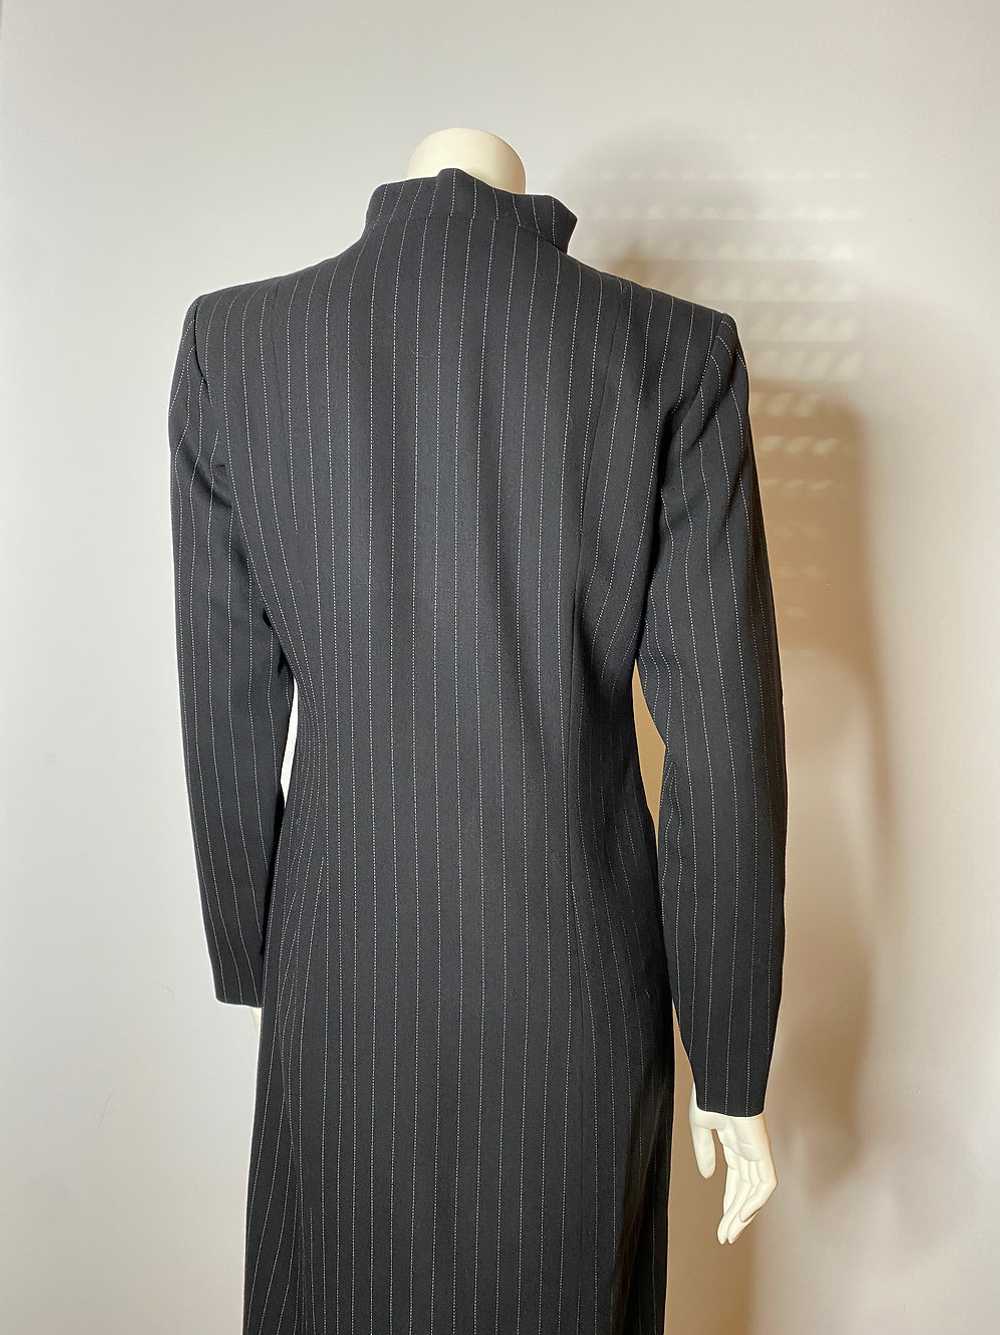 Yves Saint Laurent black striped dress - image 9